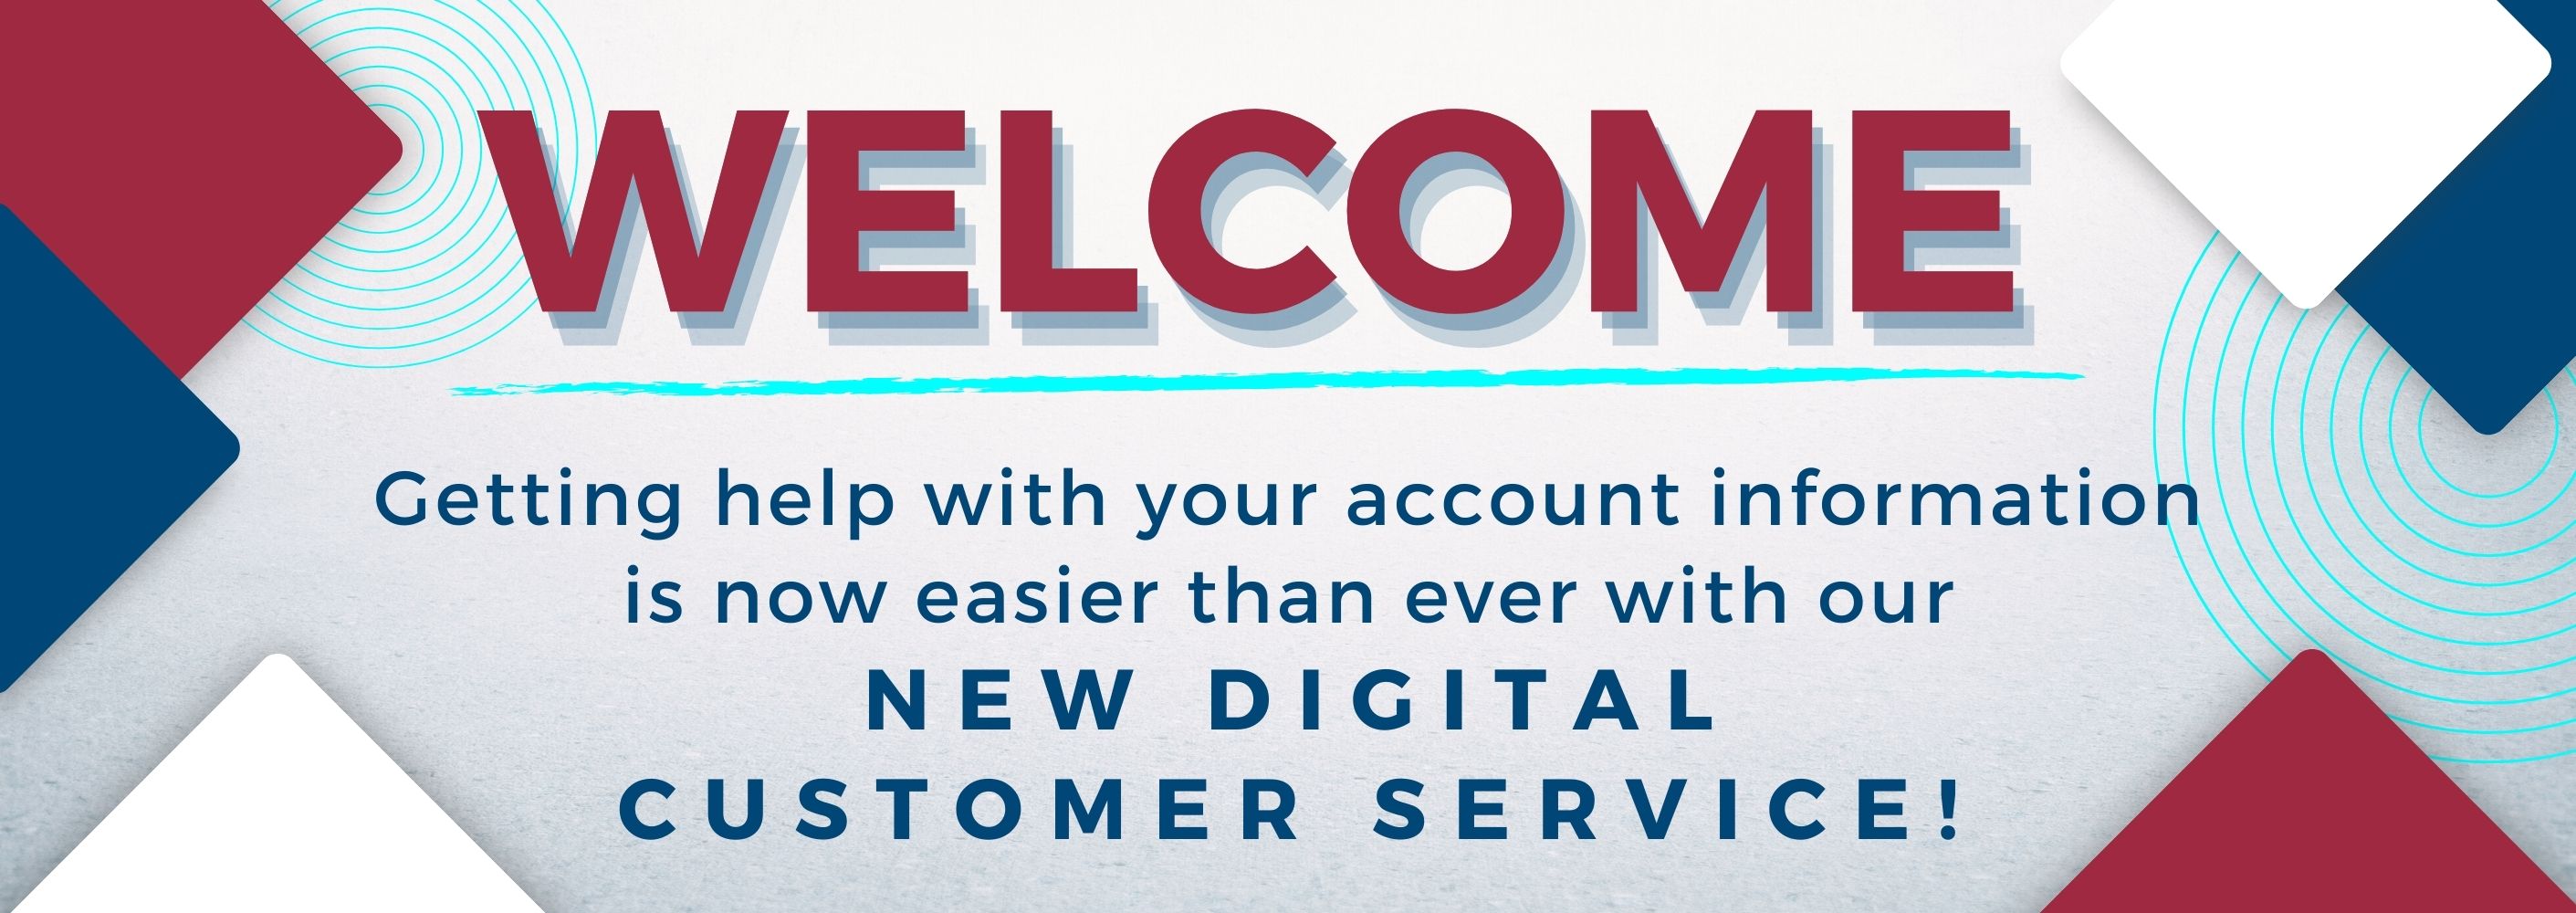 New digital customer service